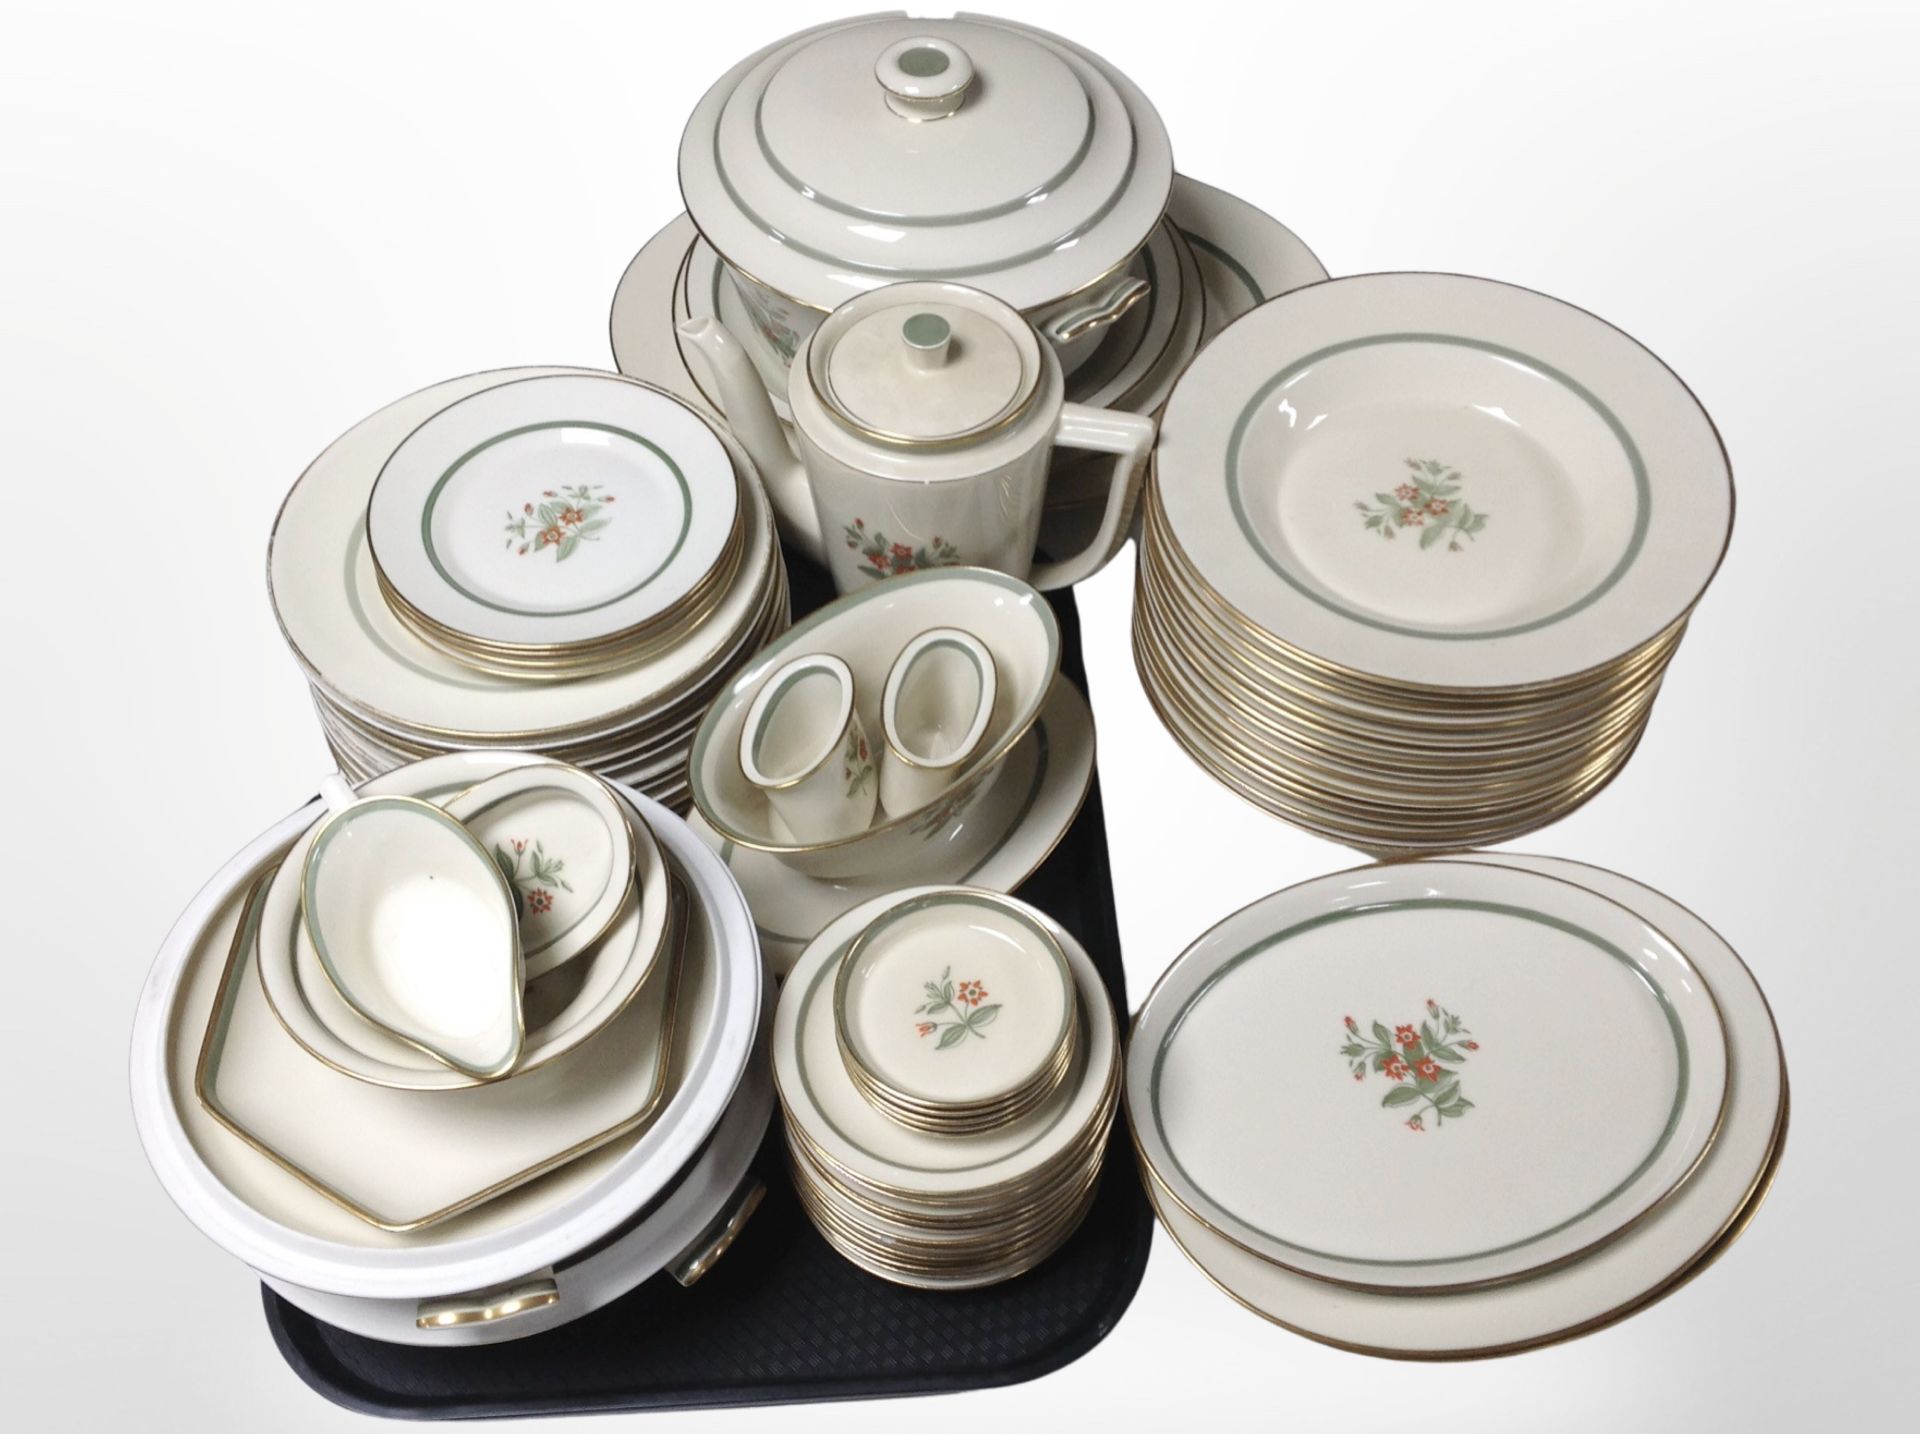 A large quantity of Royal Copenhagen dinner wares.